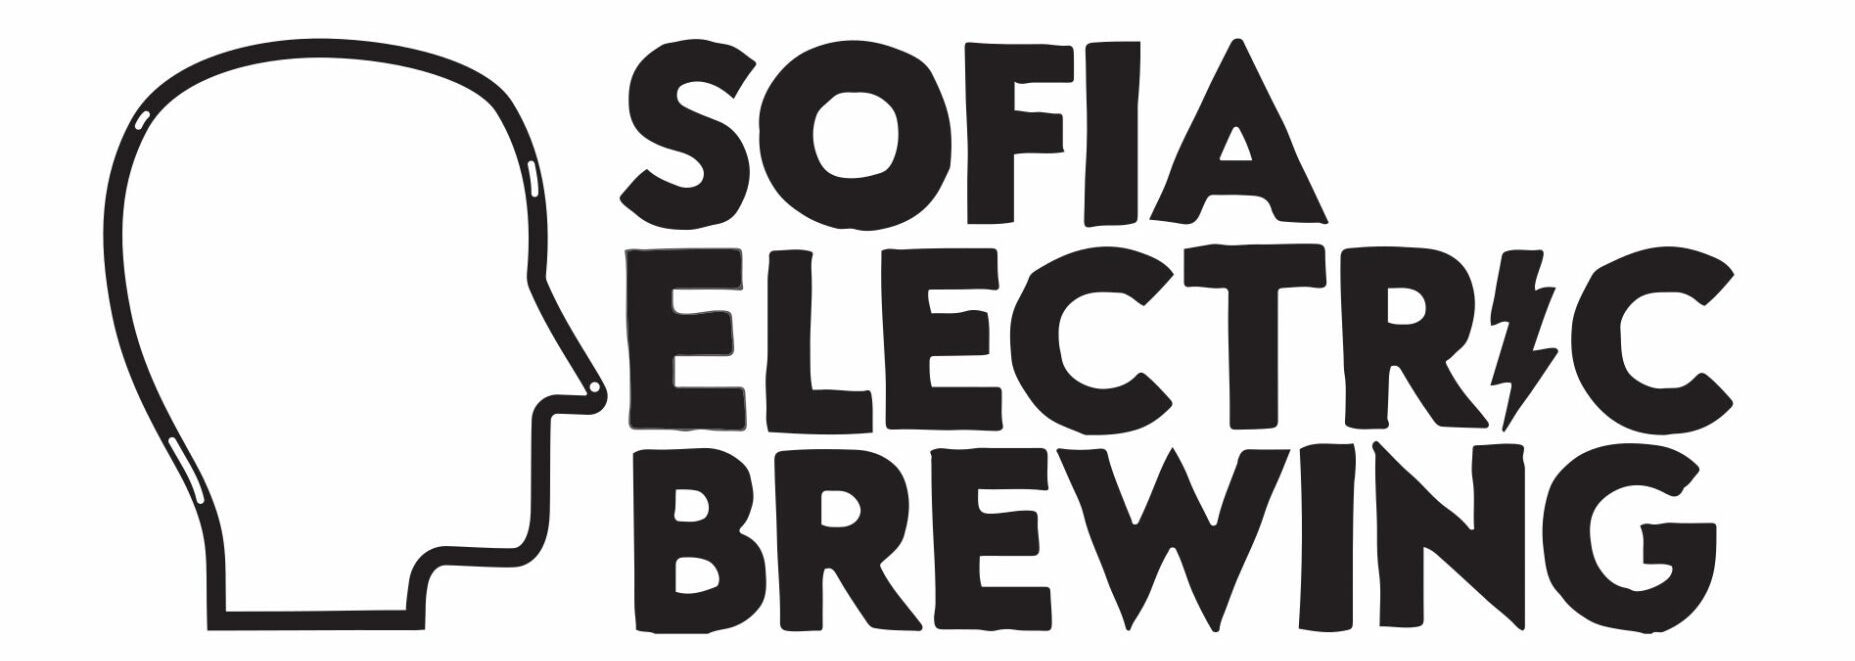 Sofia Electric Brewing Co.